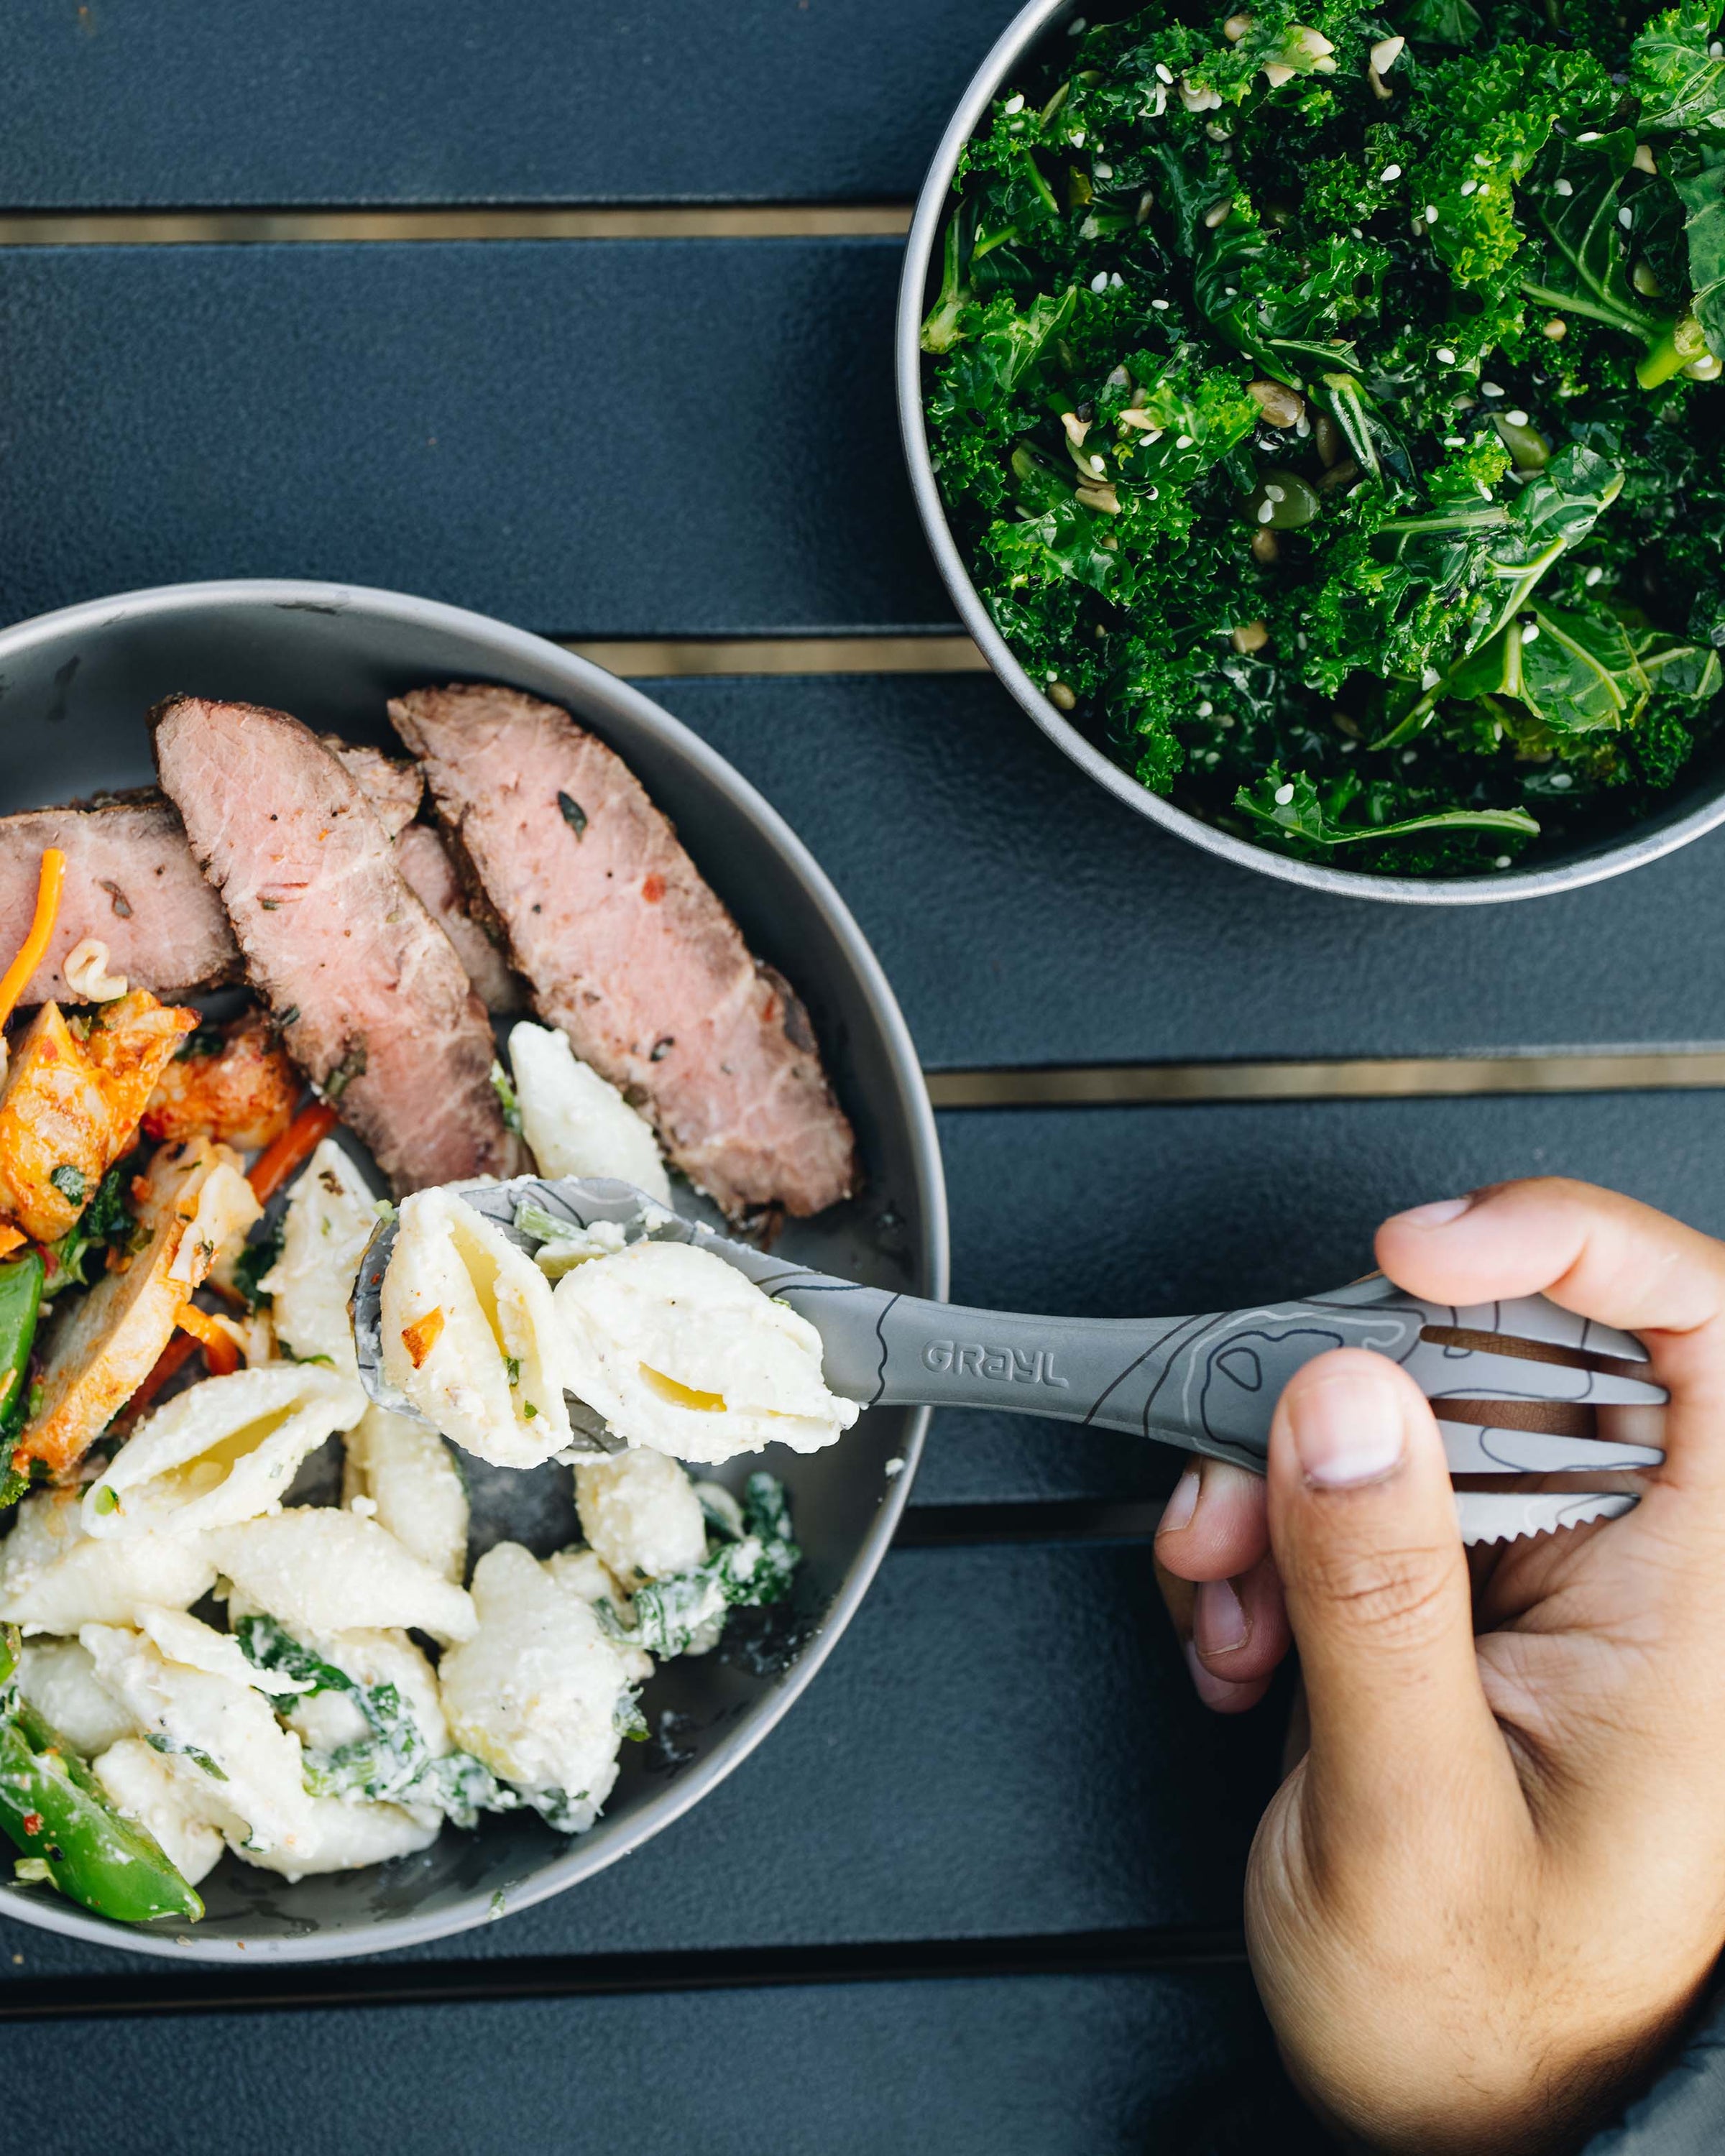 Eating steak, macaroni, and kale salad served on titanium dining set